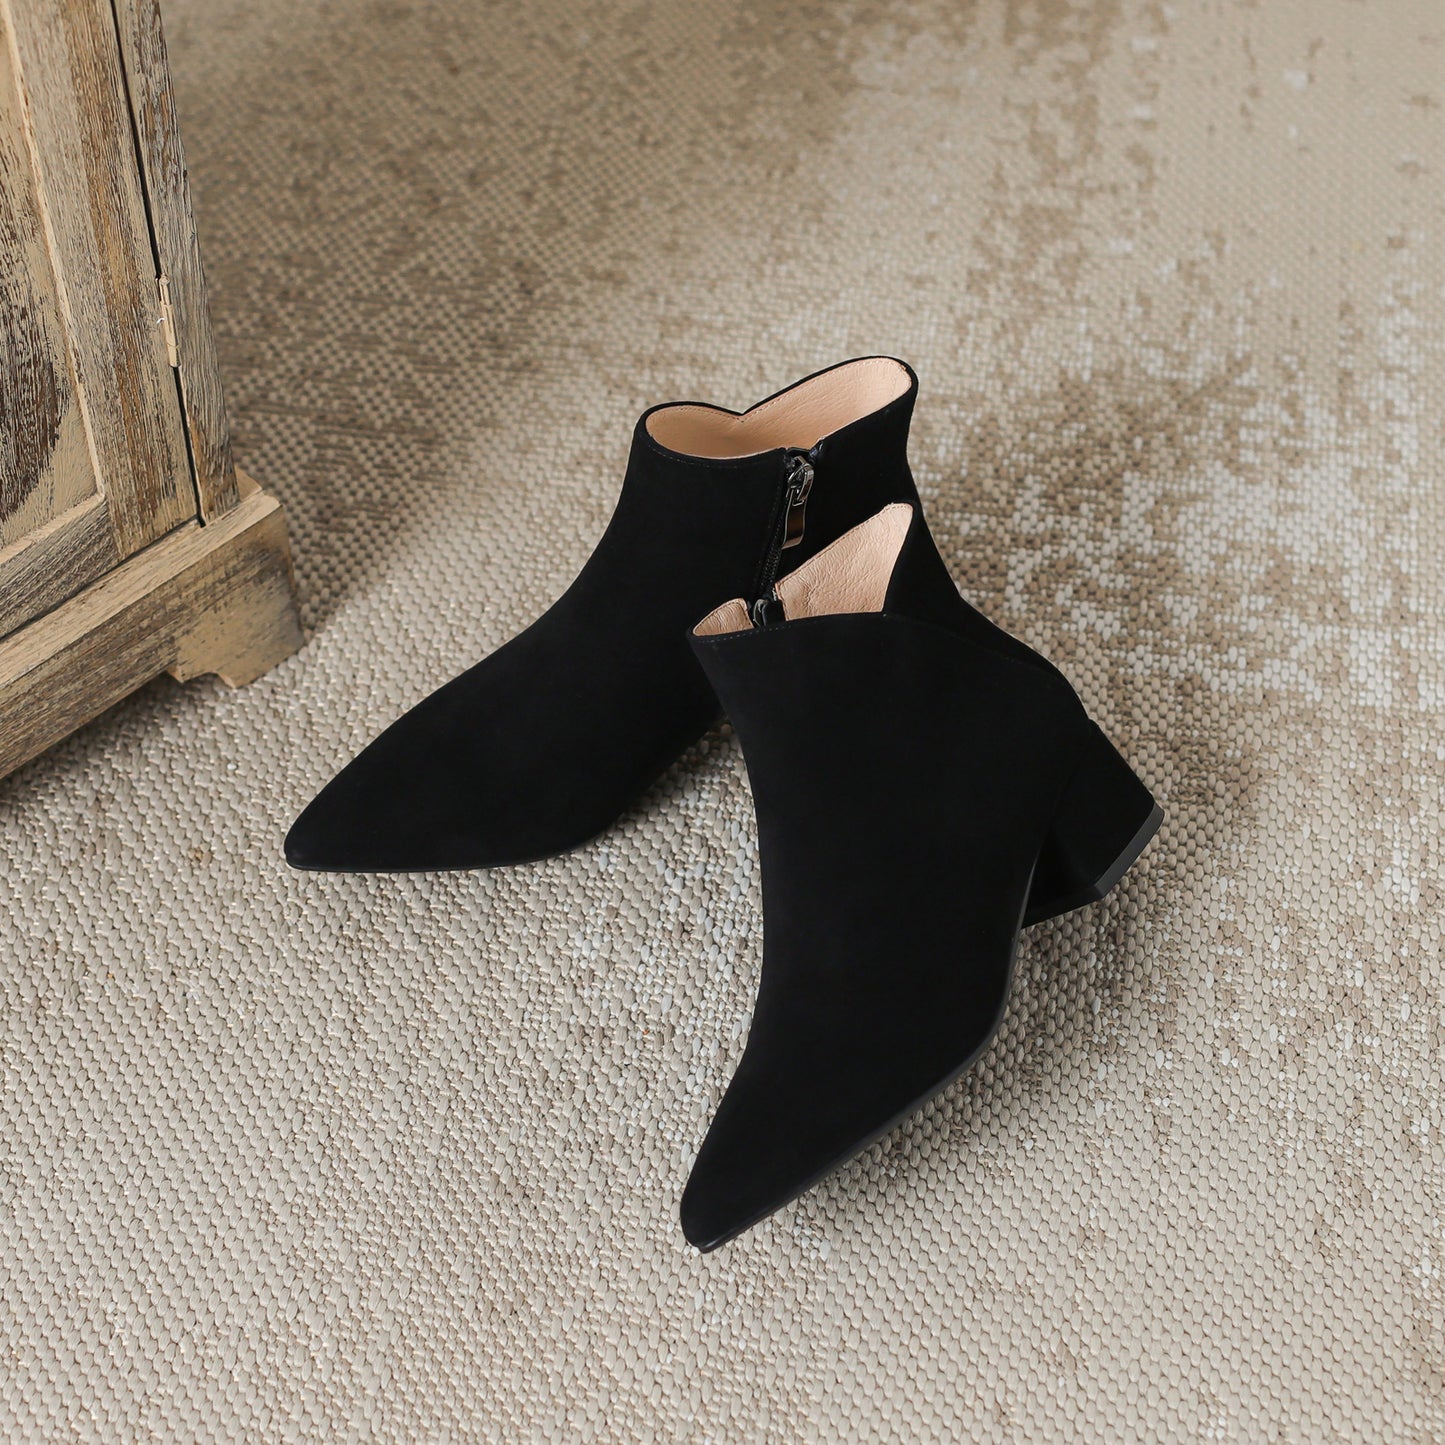 TinaCus Women's Handmade Leather Block Heel Side Zip Up Black Ankle Boots